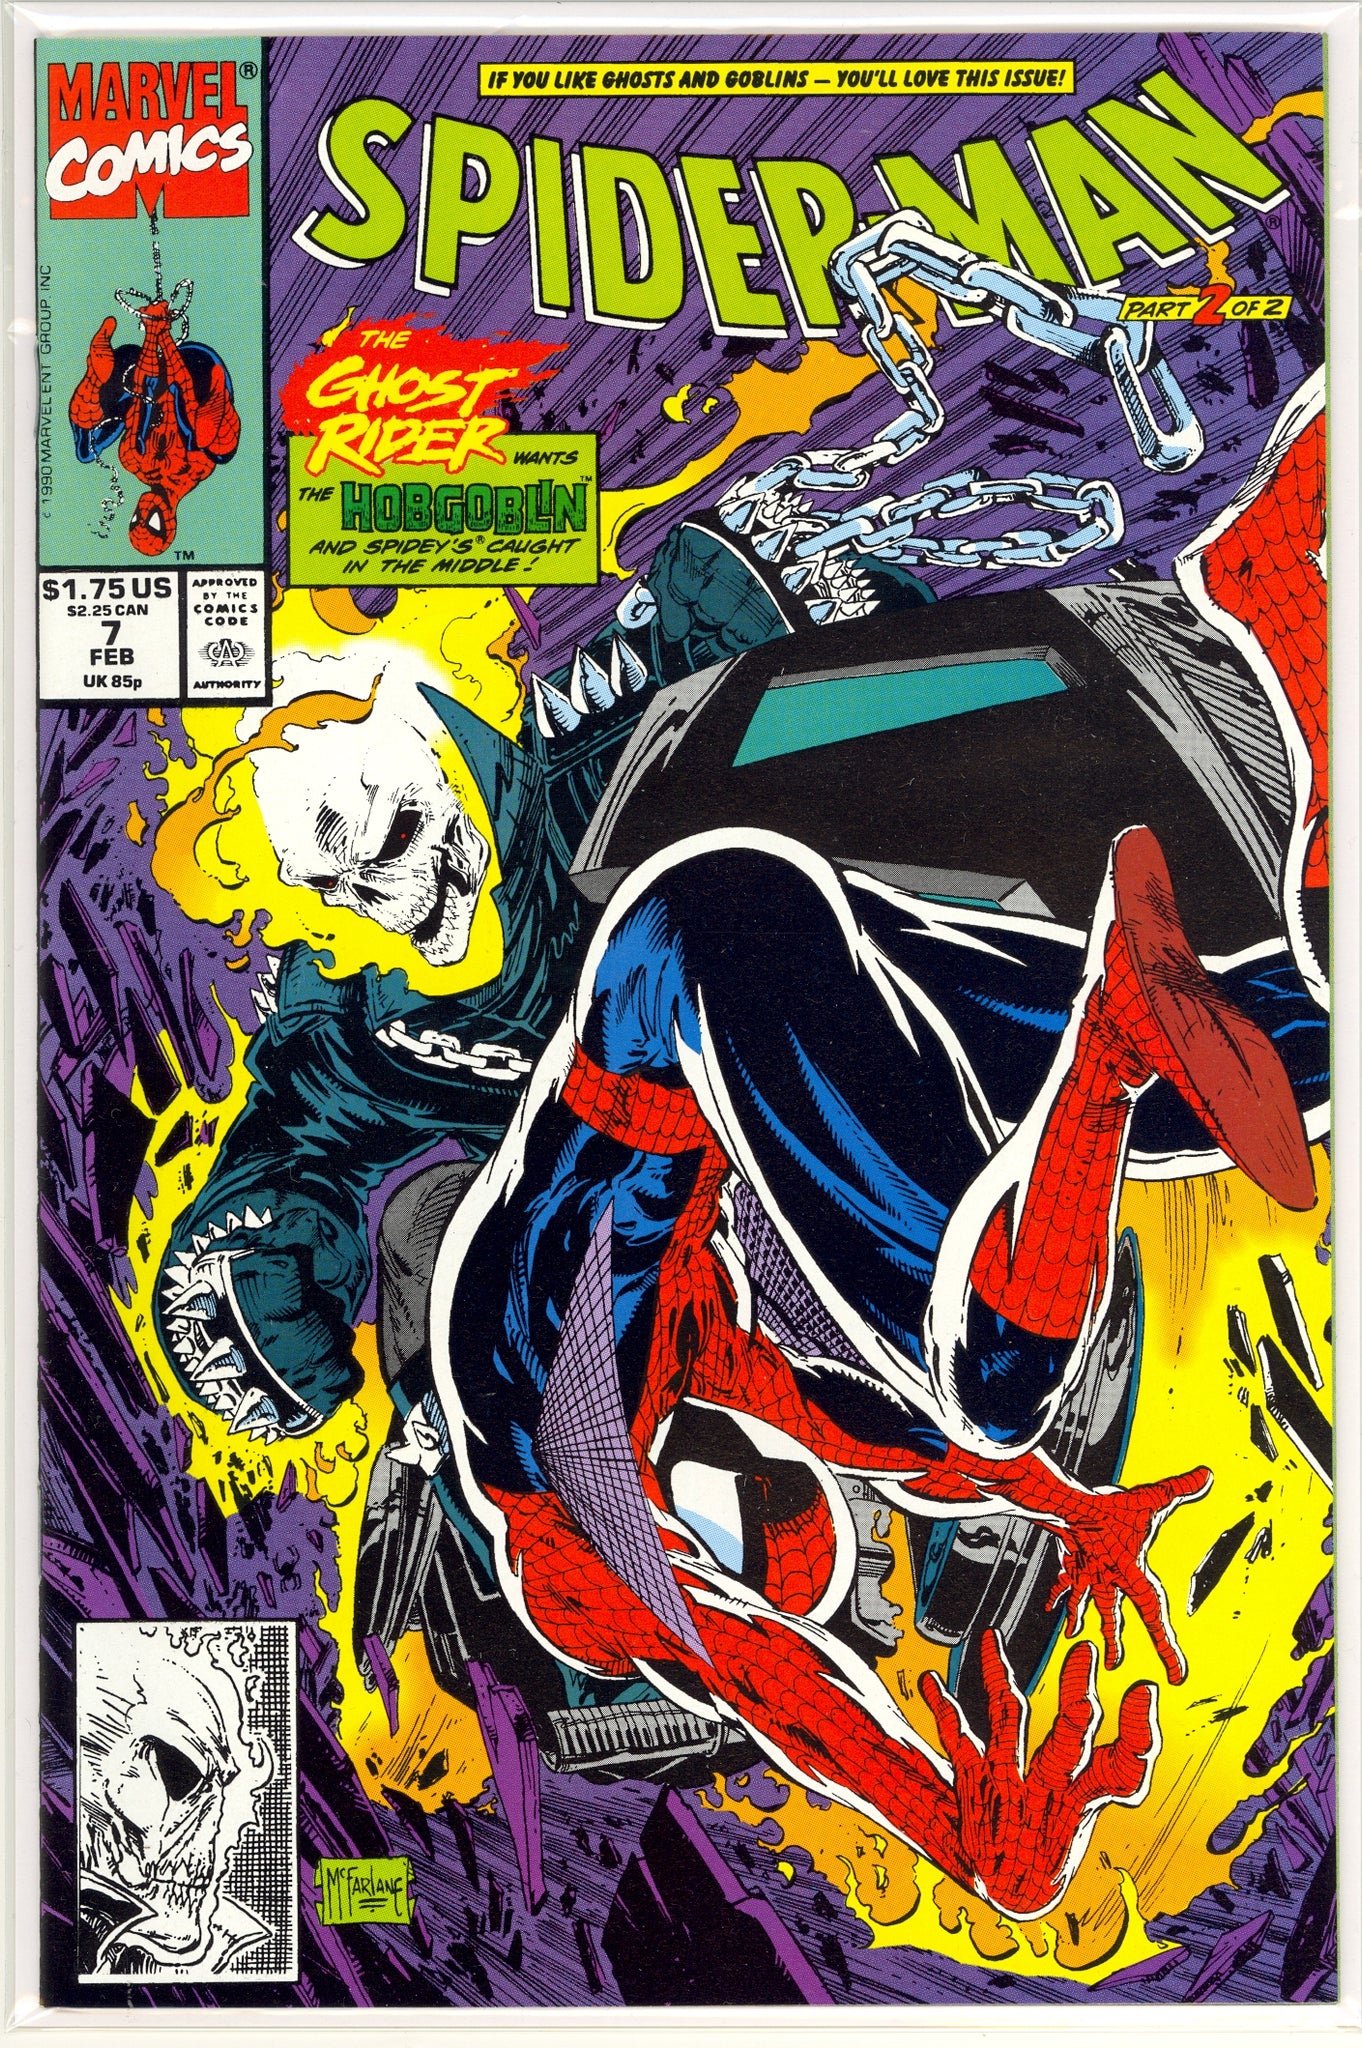 Spider-Man #7 (1990) Ghost Rider, Hobgoblin